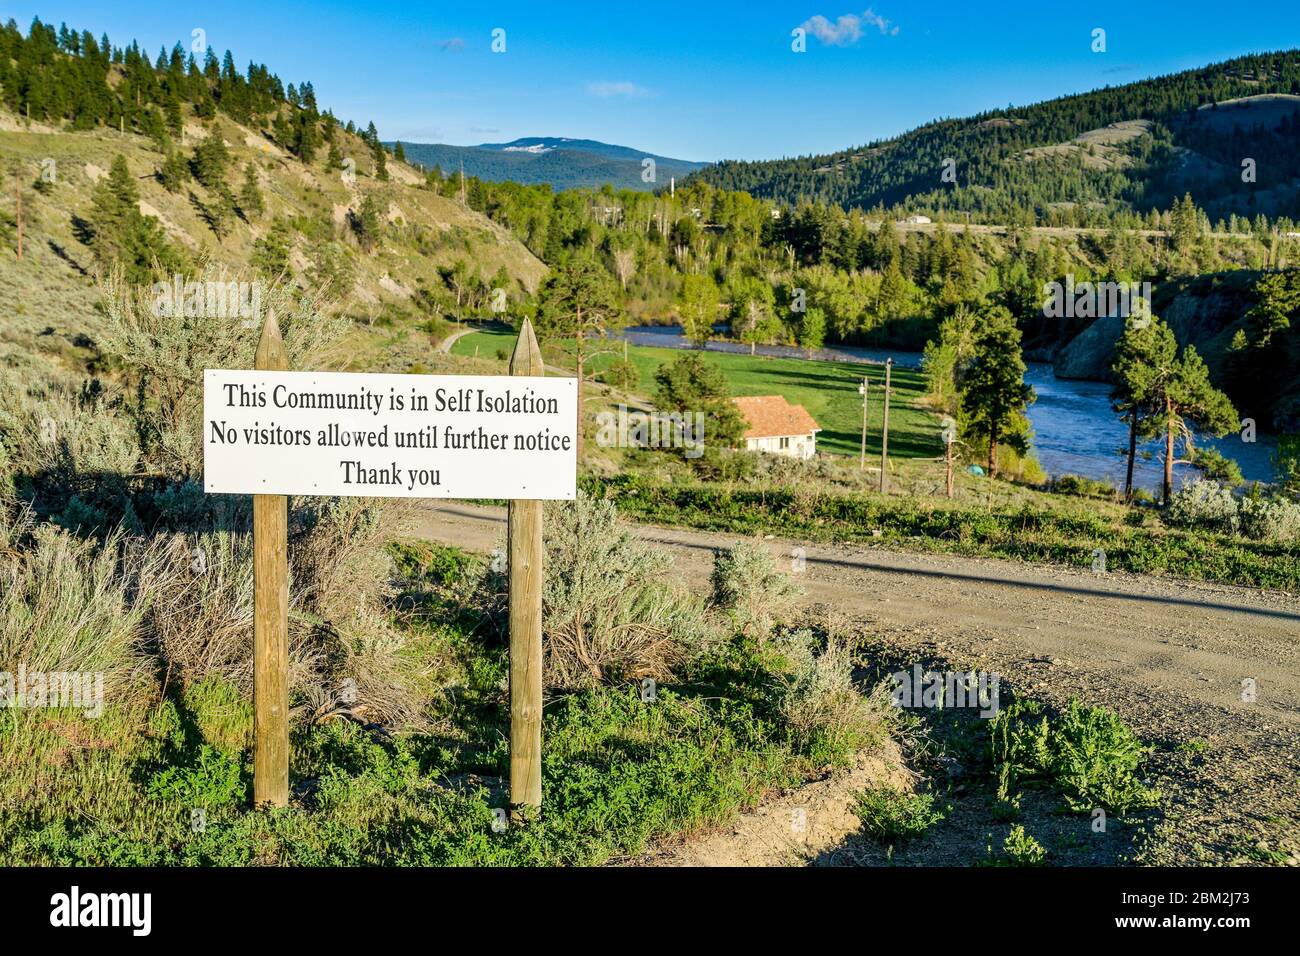 Self isolation notice sign, lower Nicola Valley, British Columbia, Canada Stock Photo